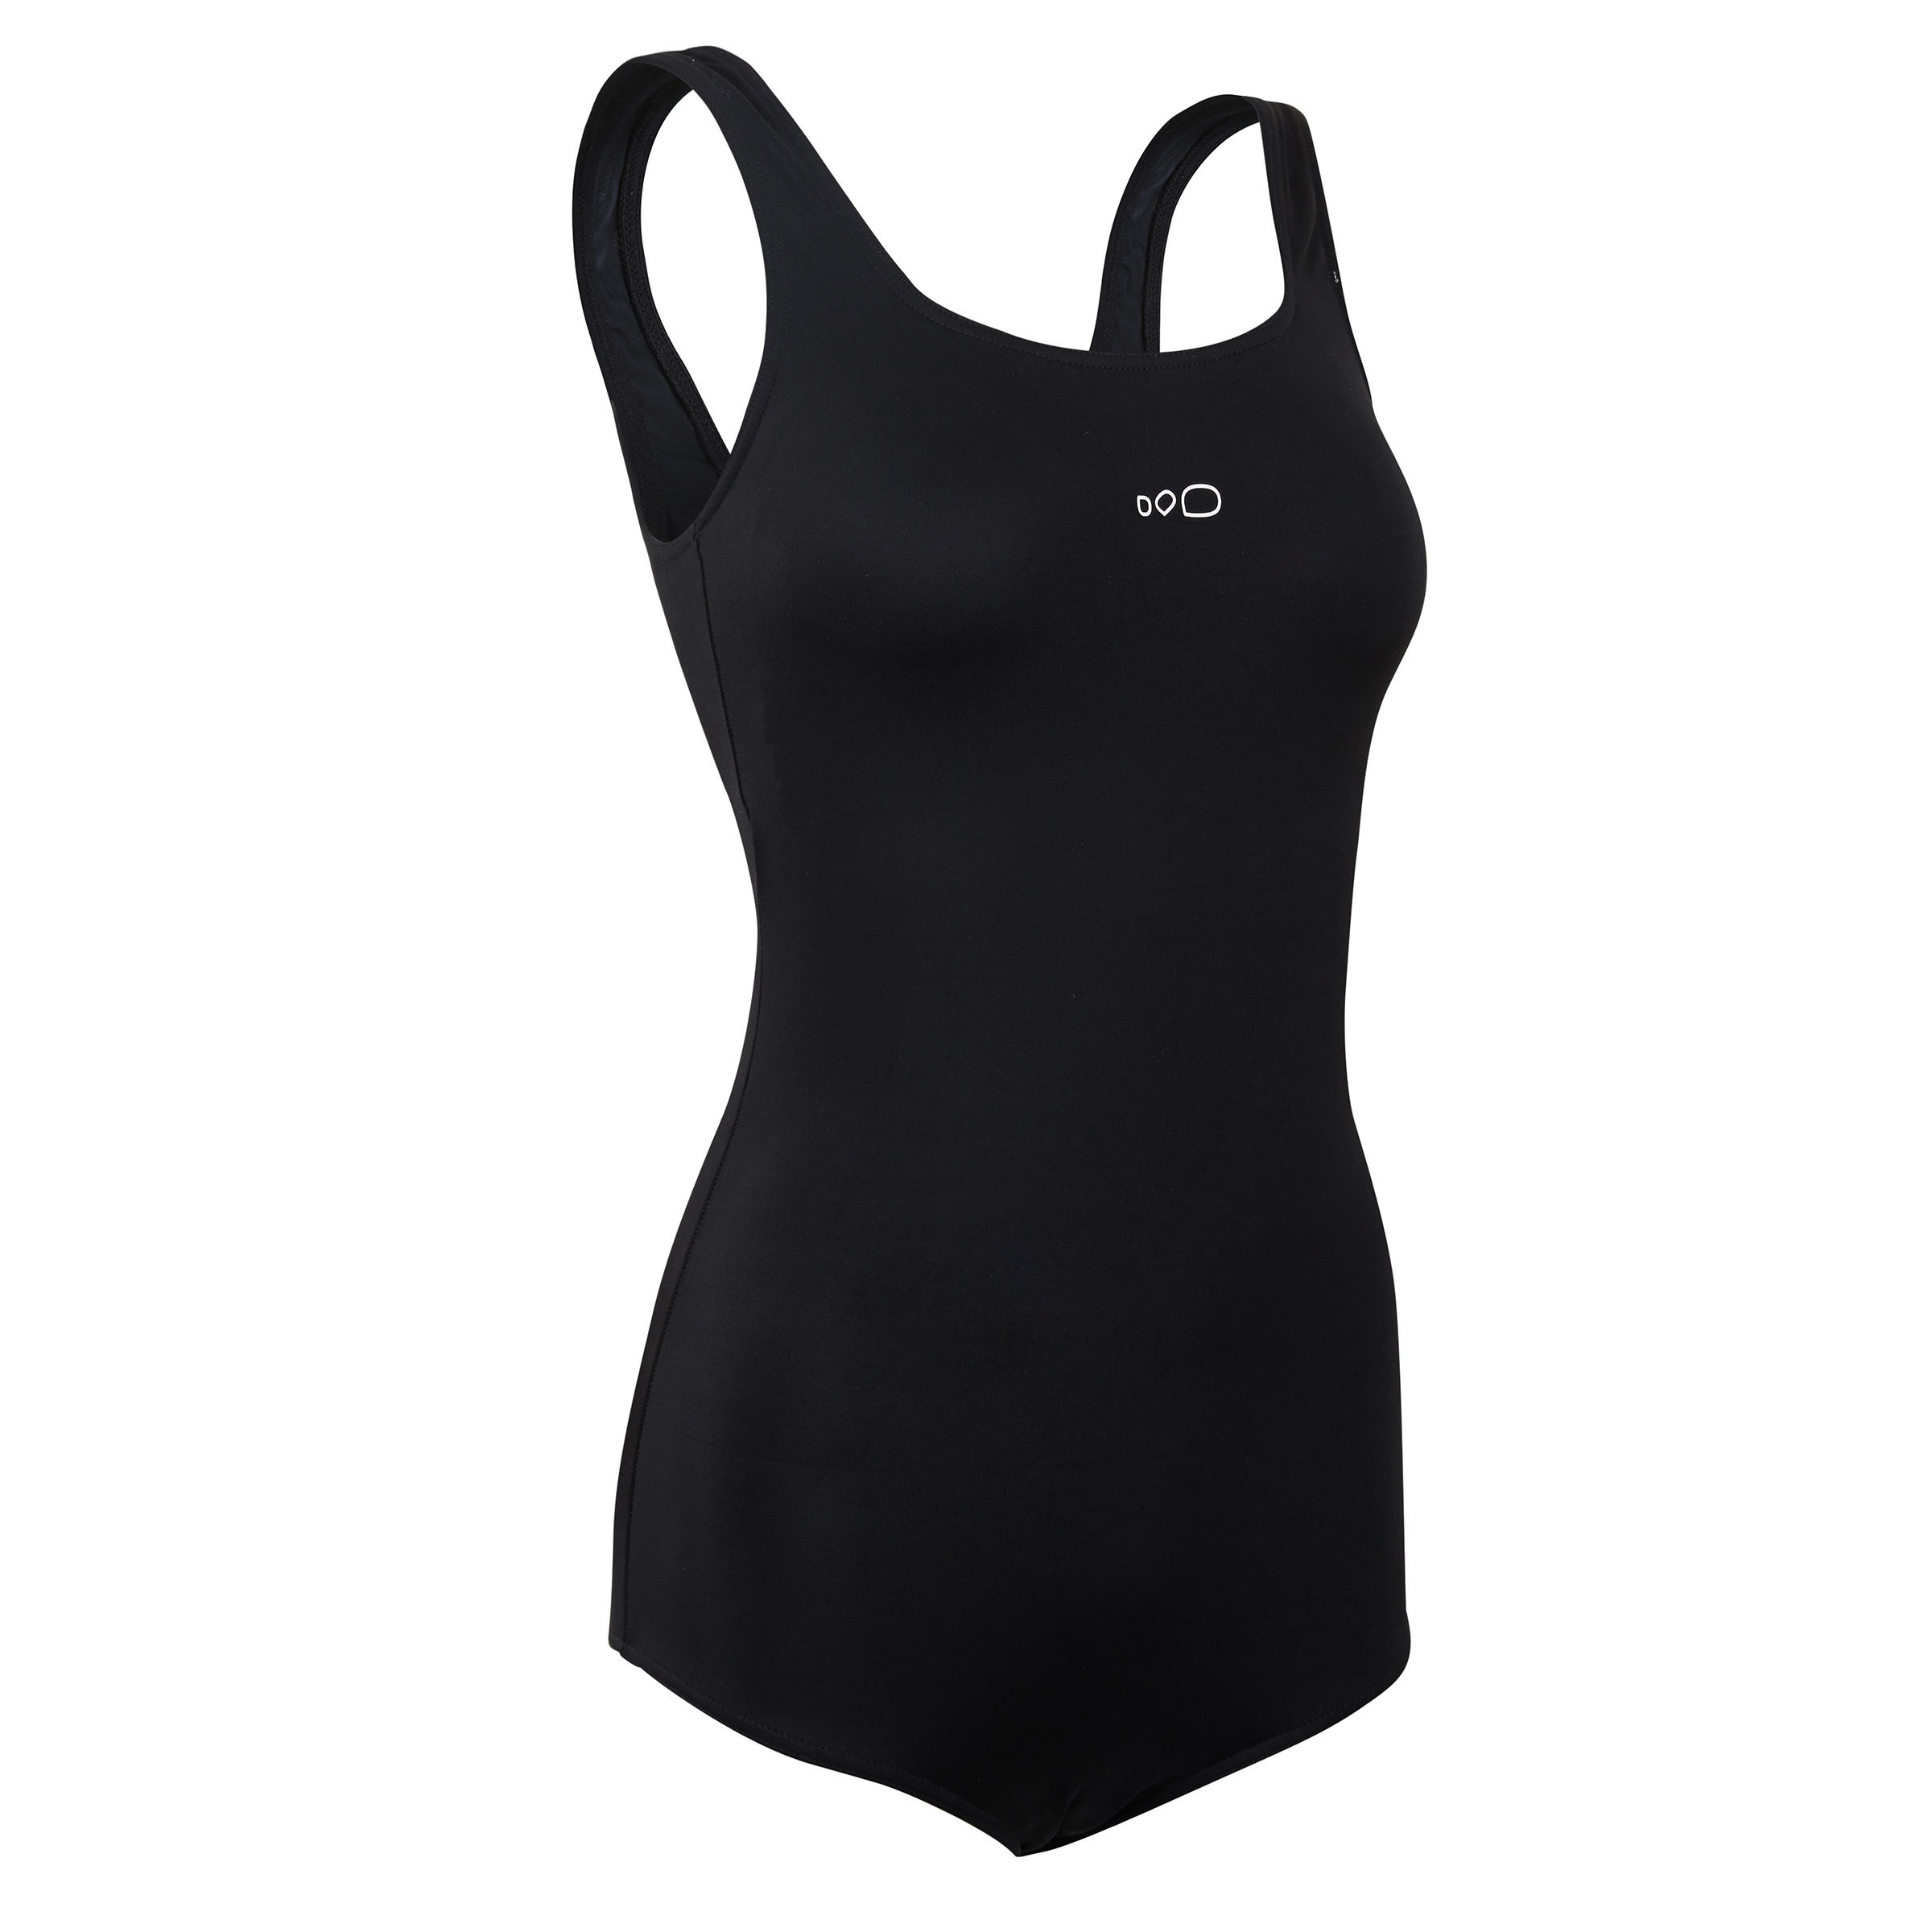 swimming costume for womens decathlon